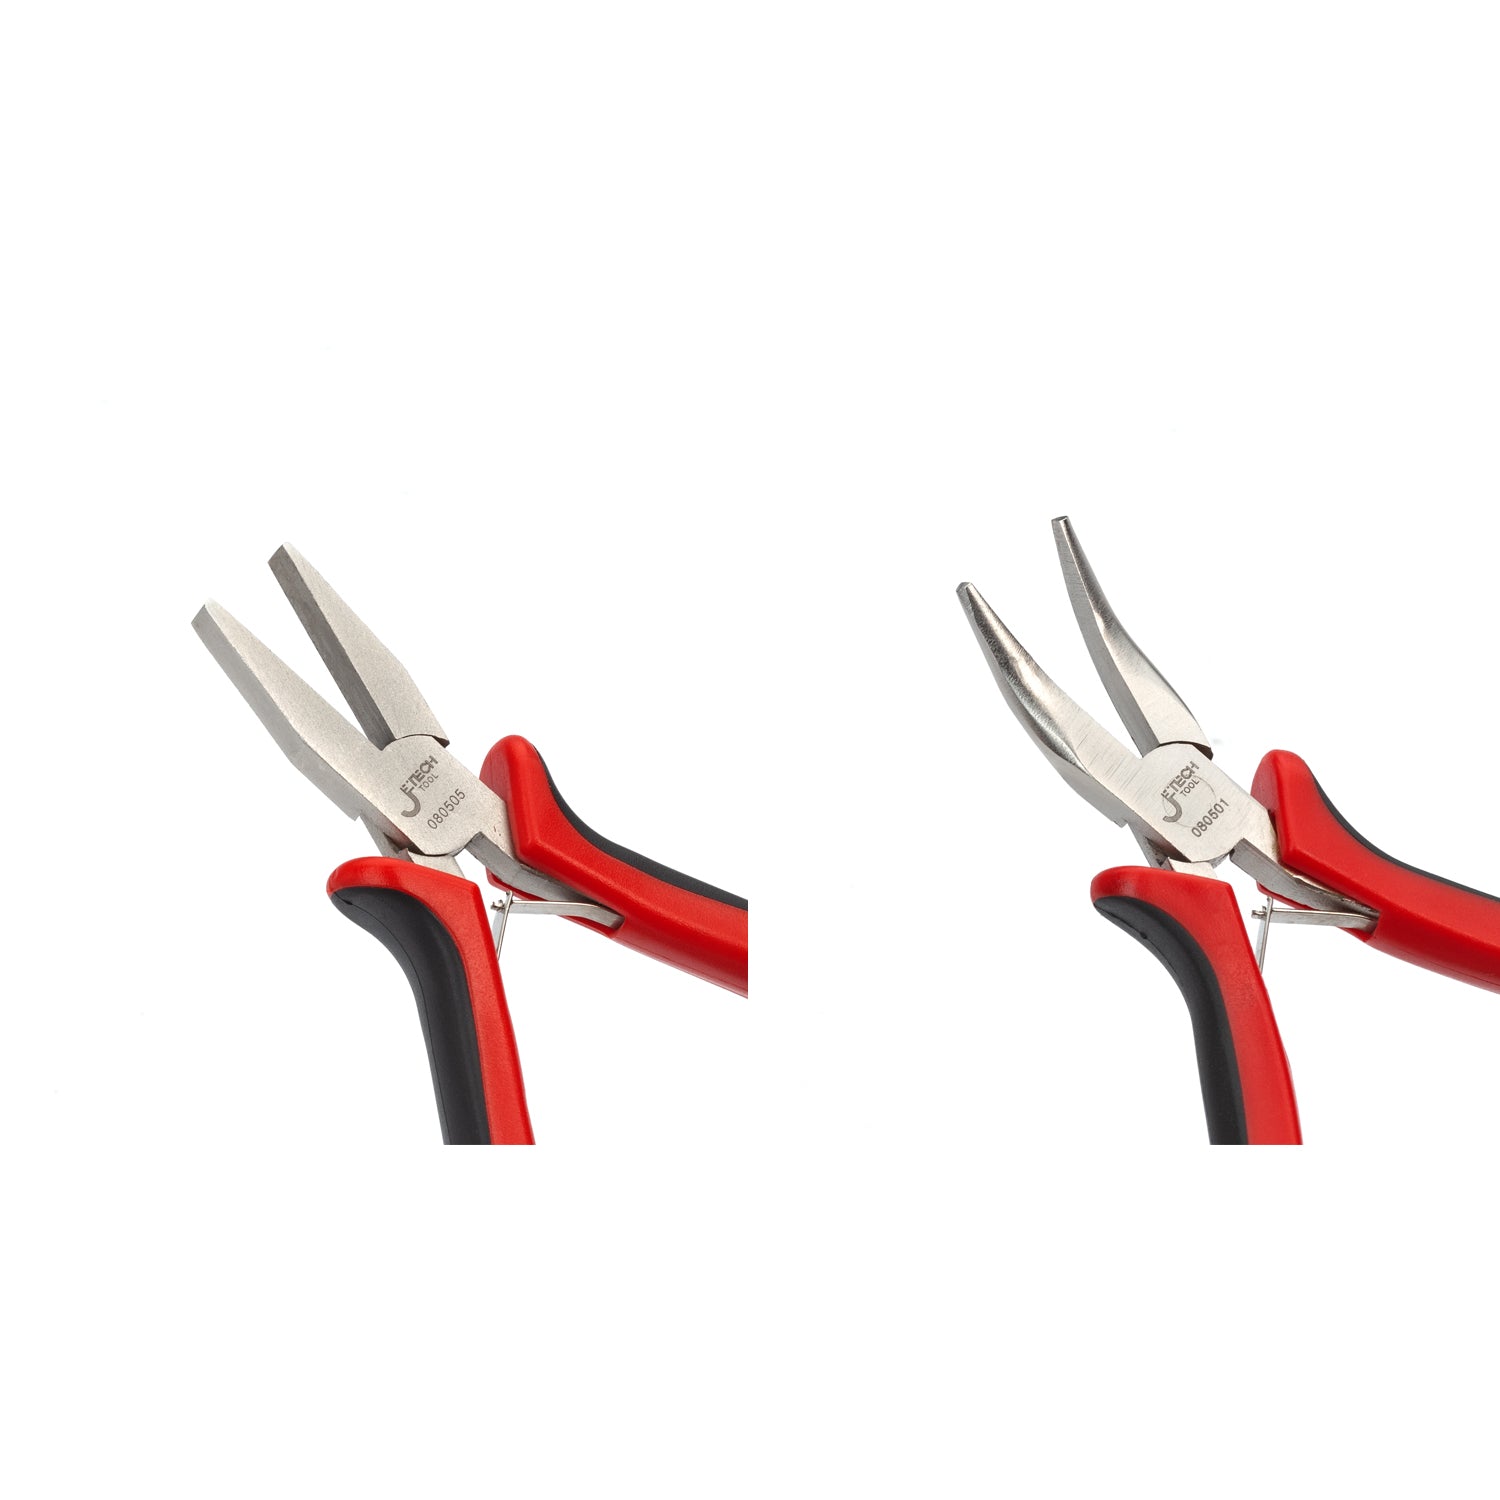 Jetech 6PCS Mini Pliers Set, Jewelry Pliers Tools – ToolsPlease